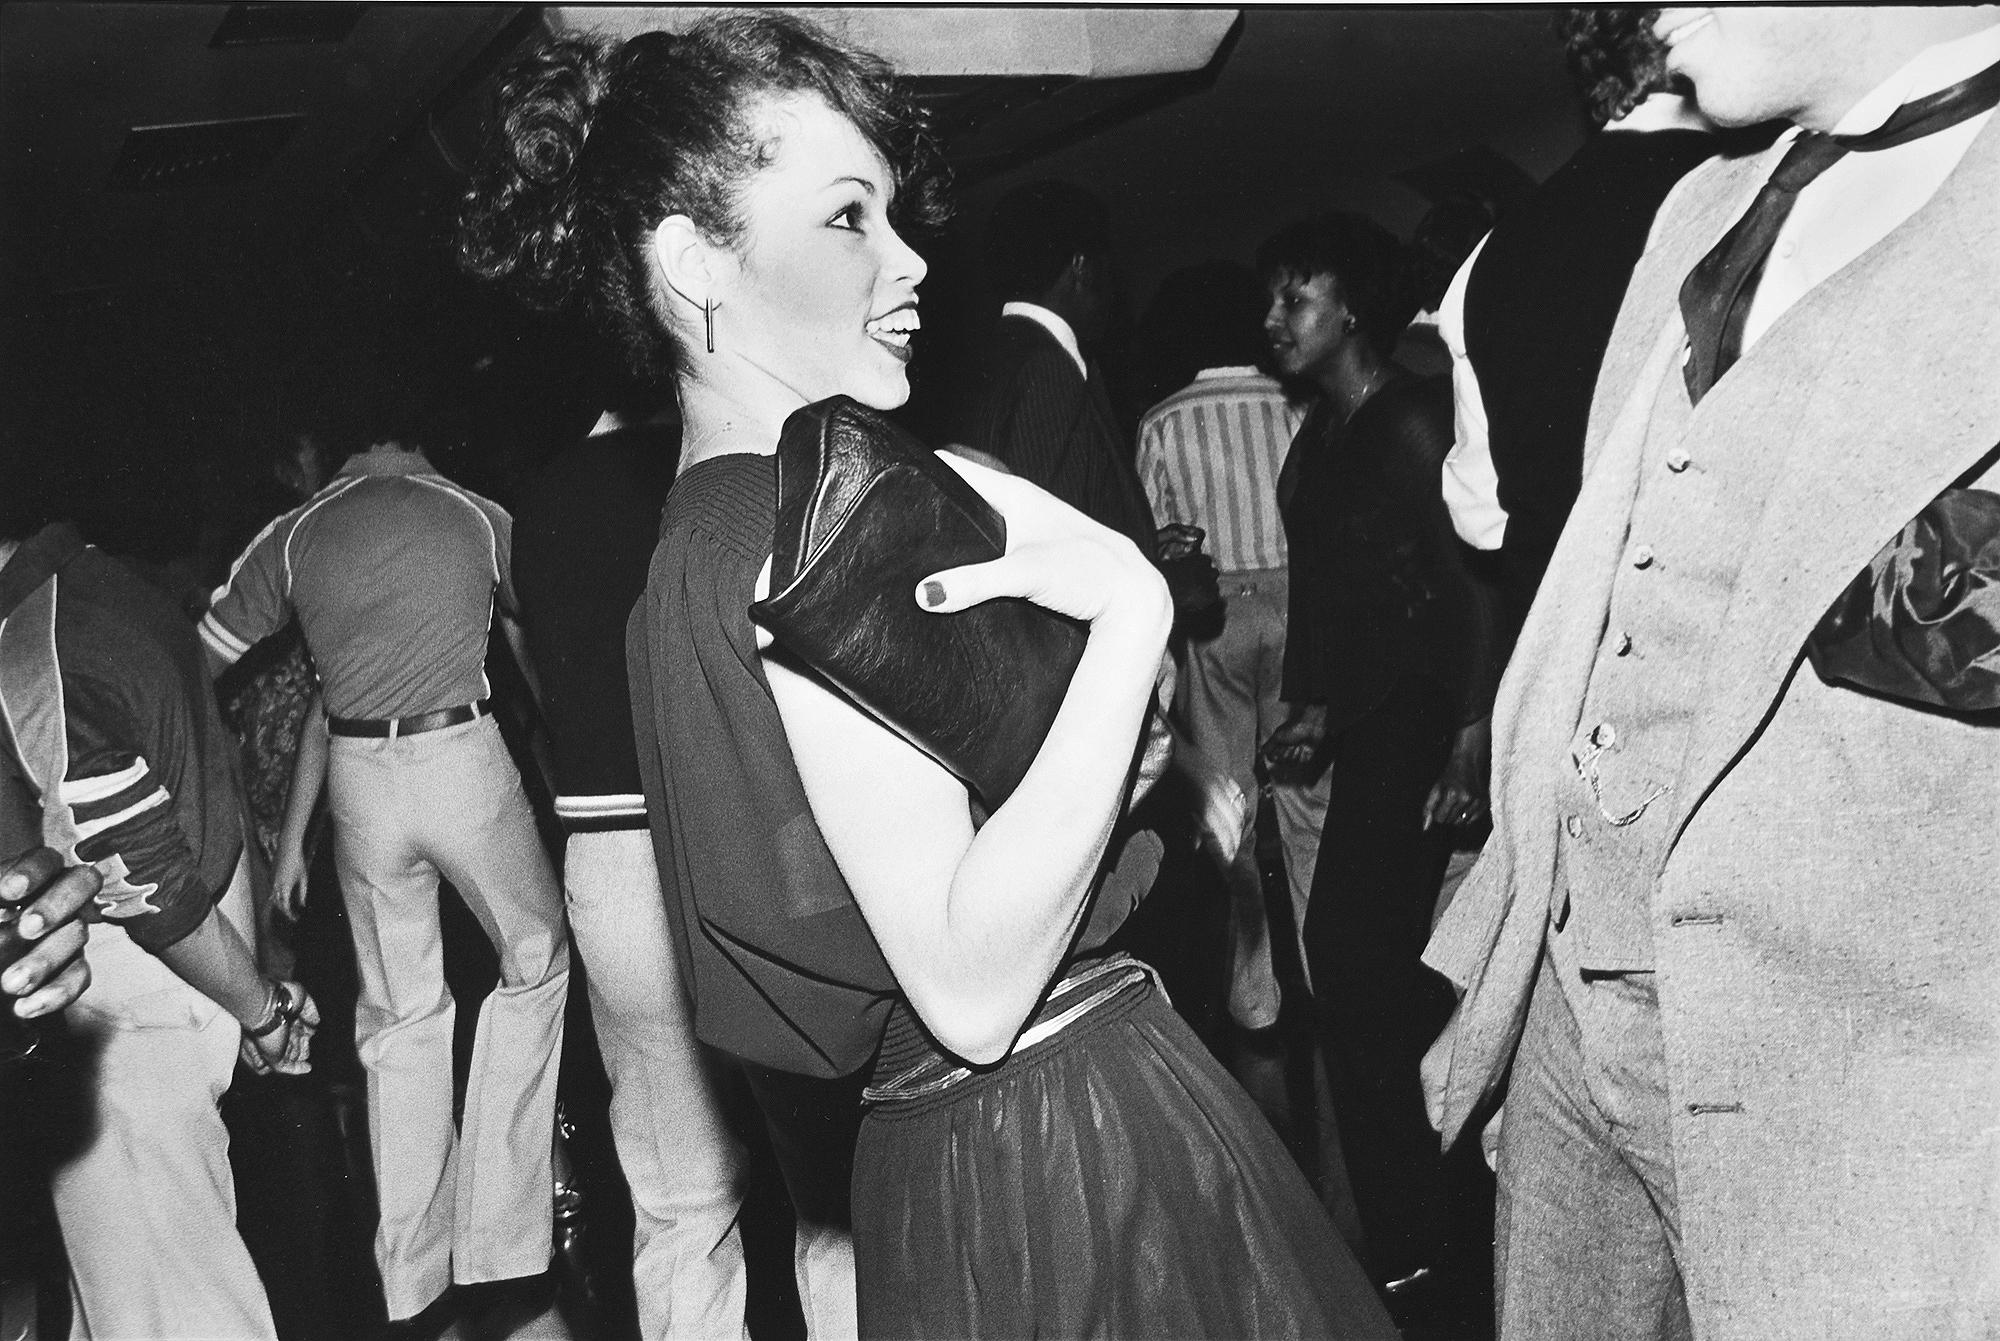 Tony_Ward_photography_early_work_Night_Fever_portfolio_1970's_erotic_dancing_flirting_fun